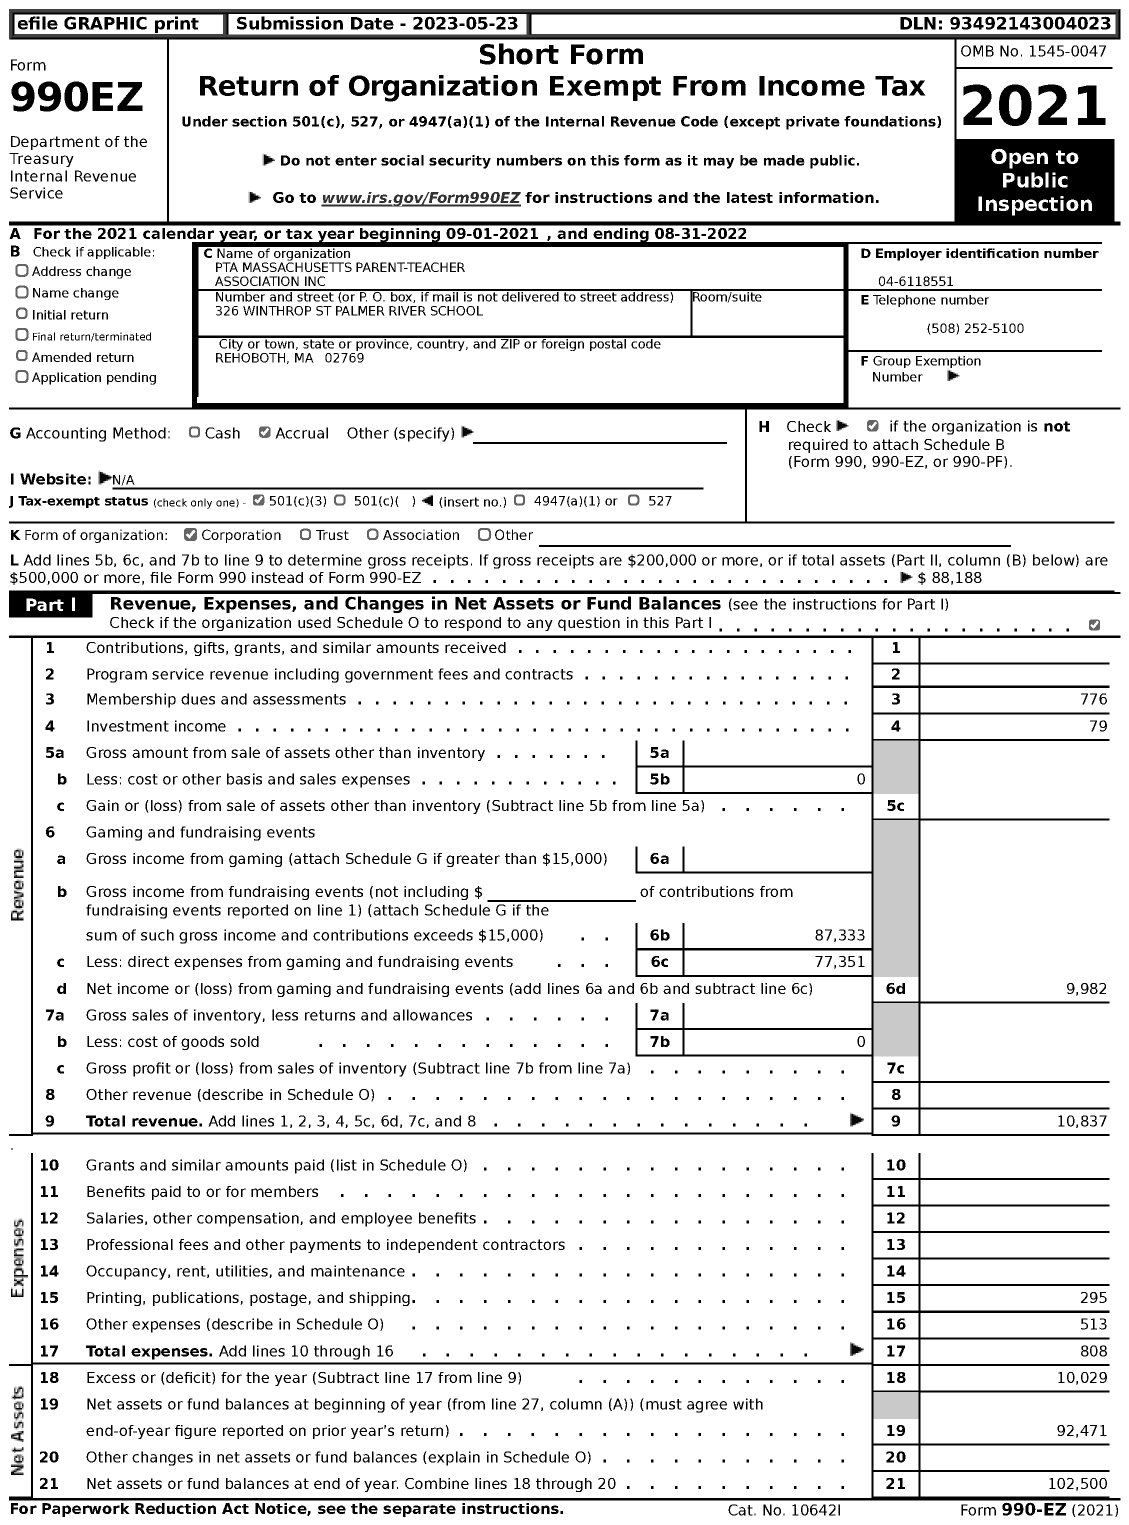 Image of first page of 2021 Form 990EZ for PTA Massachusetts Parent-Teacher Association / Rehoboth Ptsa